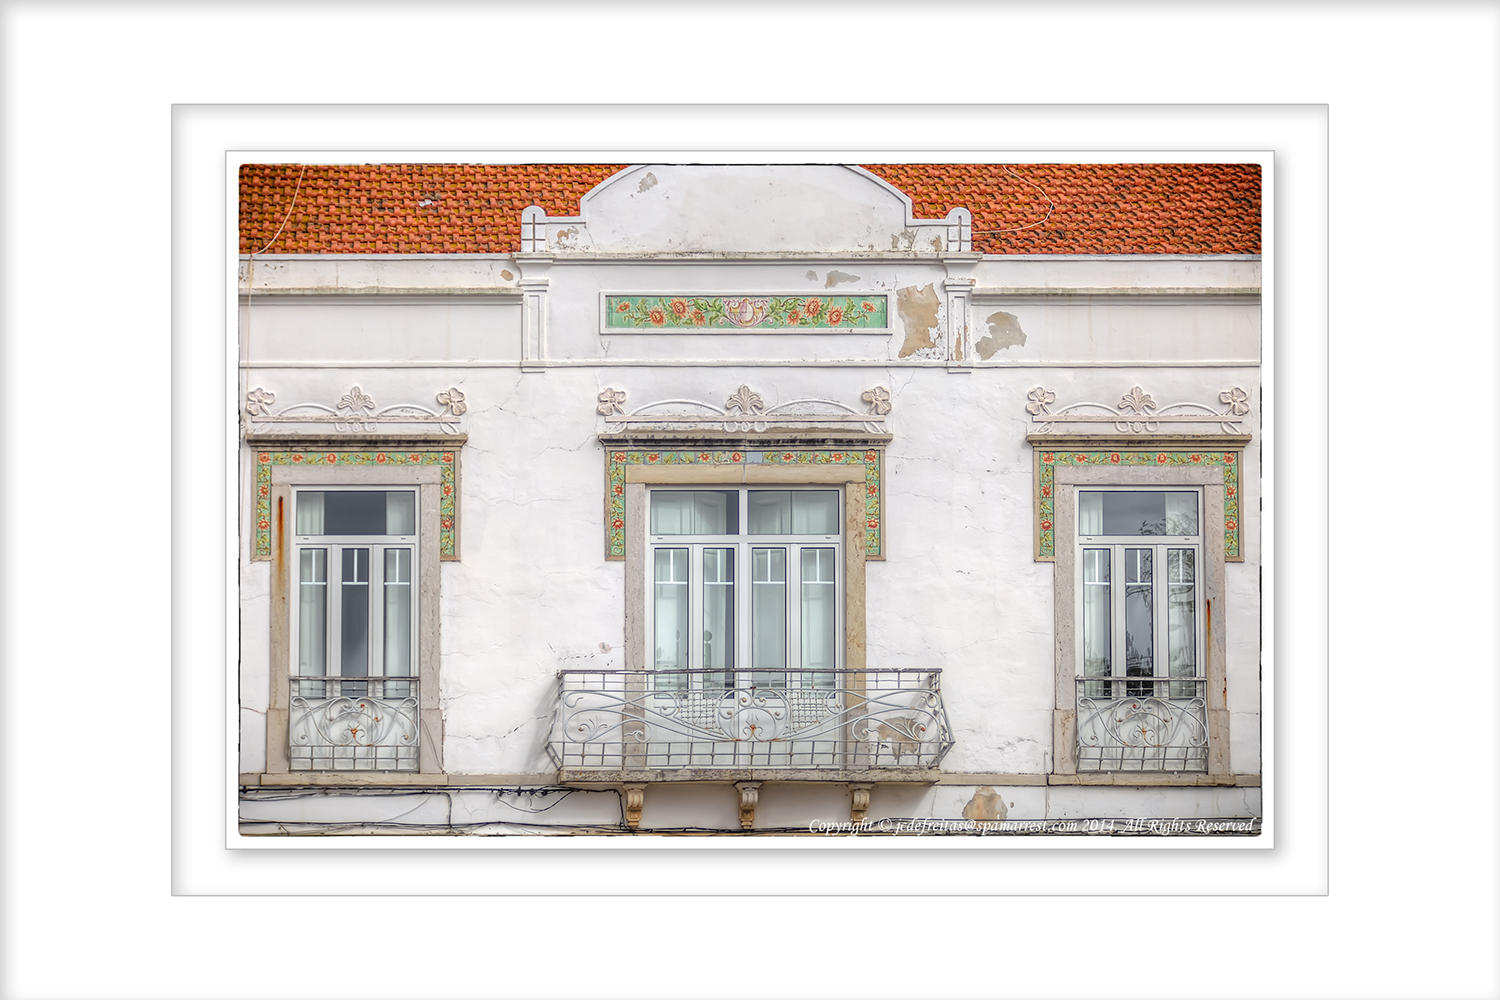 2014 - Faro, Algarve - Portugal